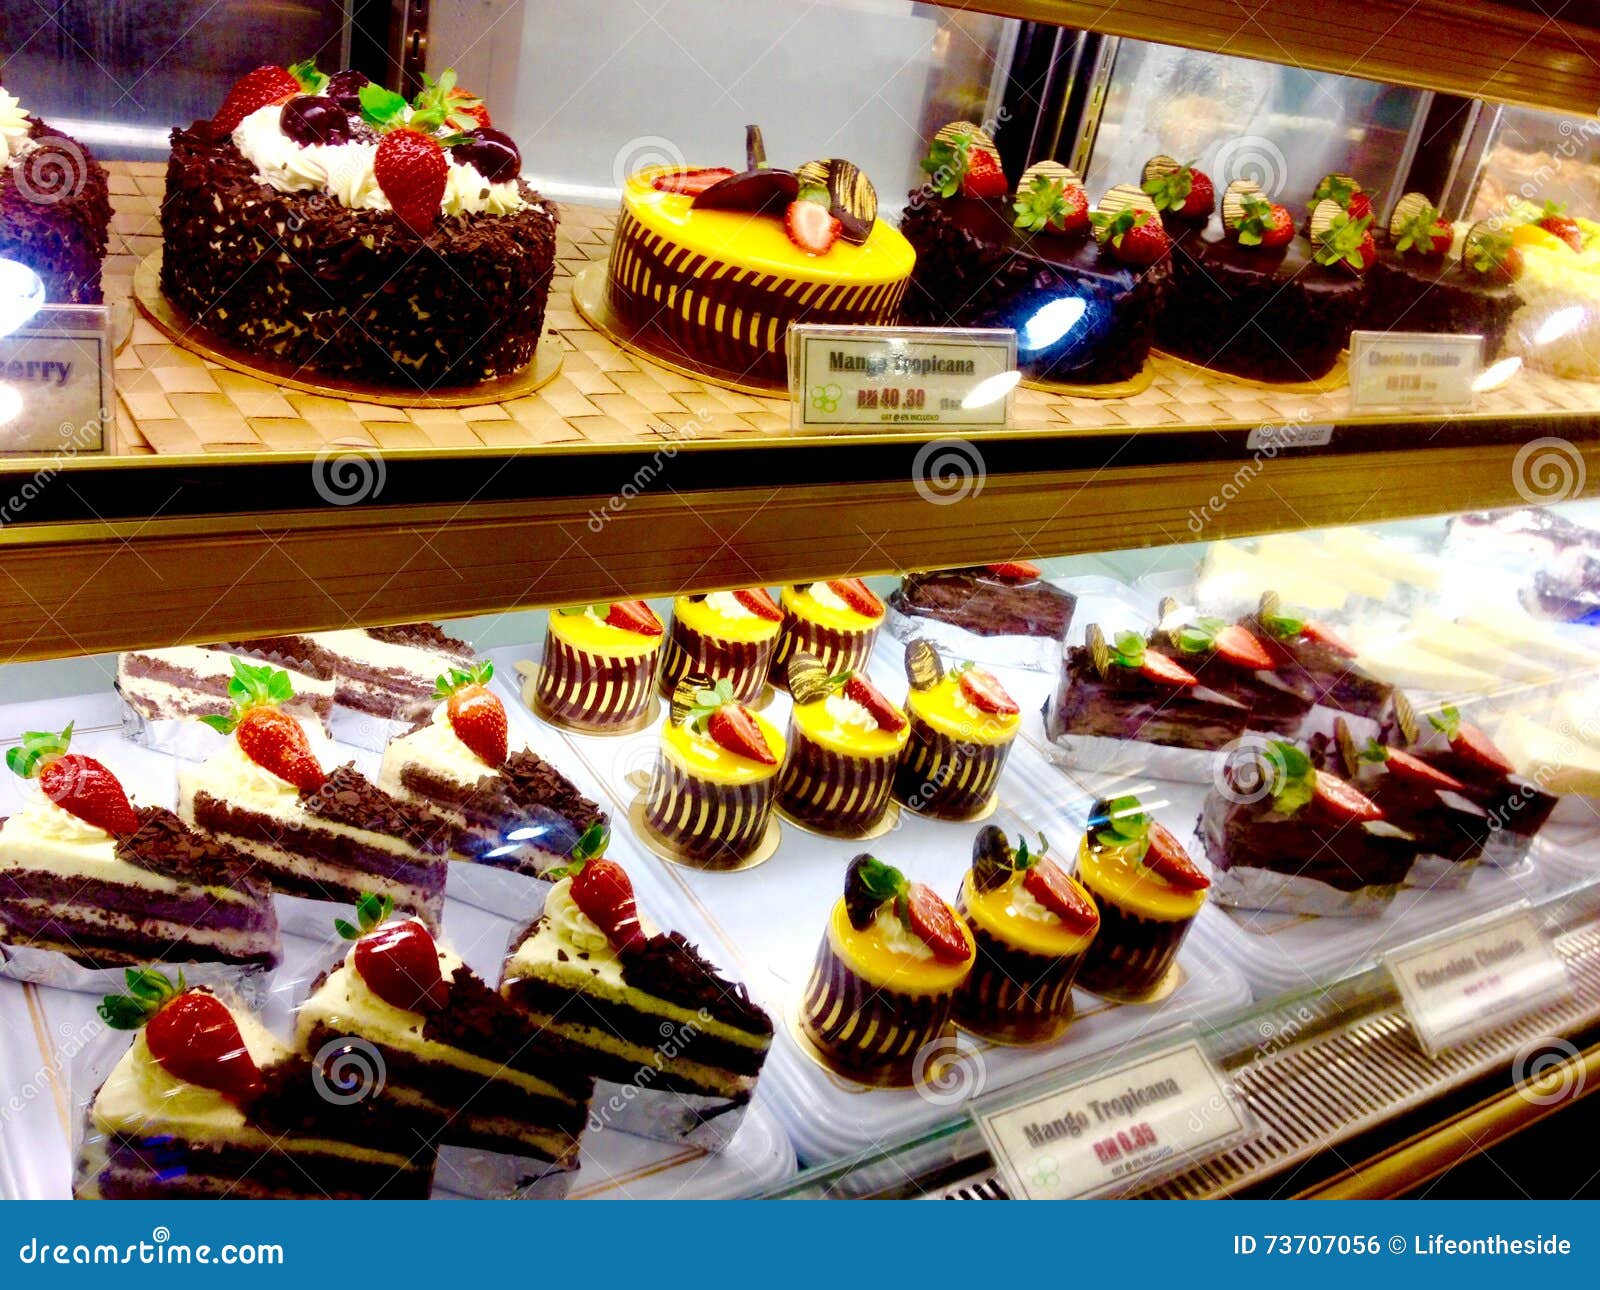 tempting bakery fancy sweet chocolate cakes desserts mango cheesecake & fresh strawberries